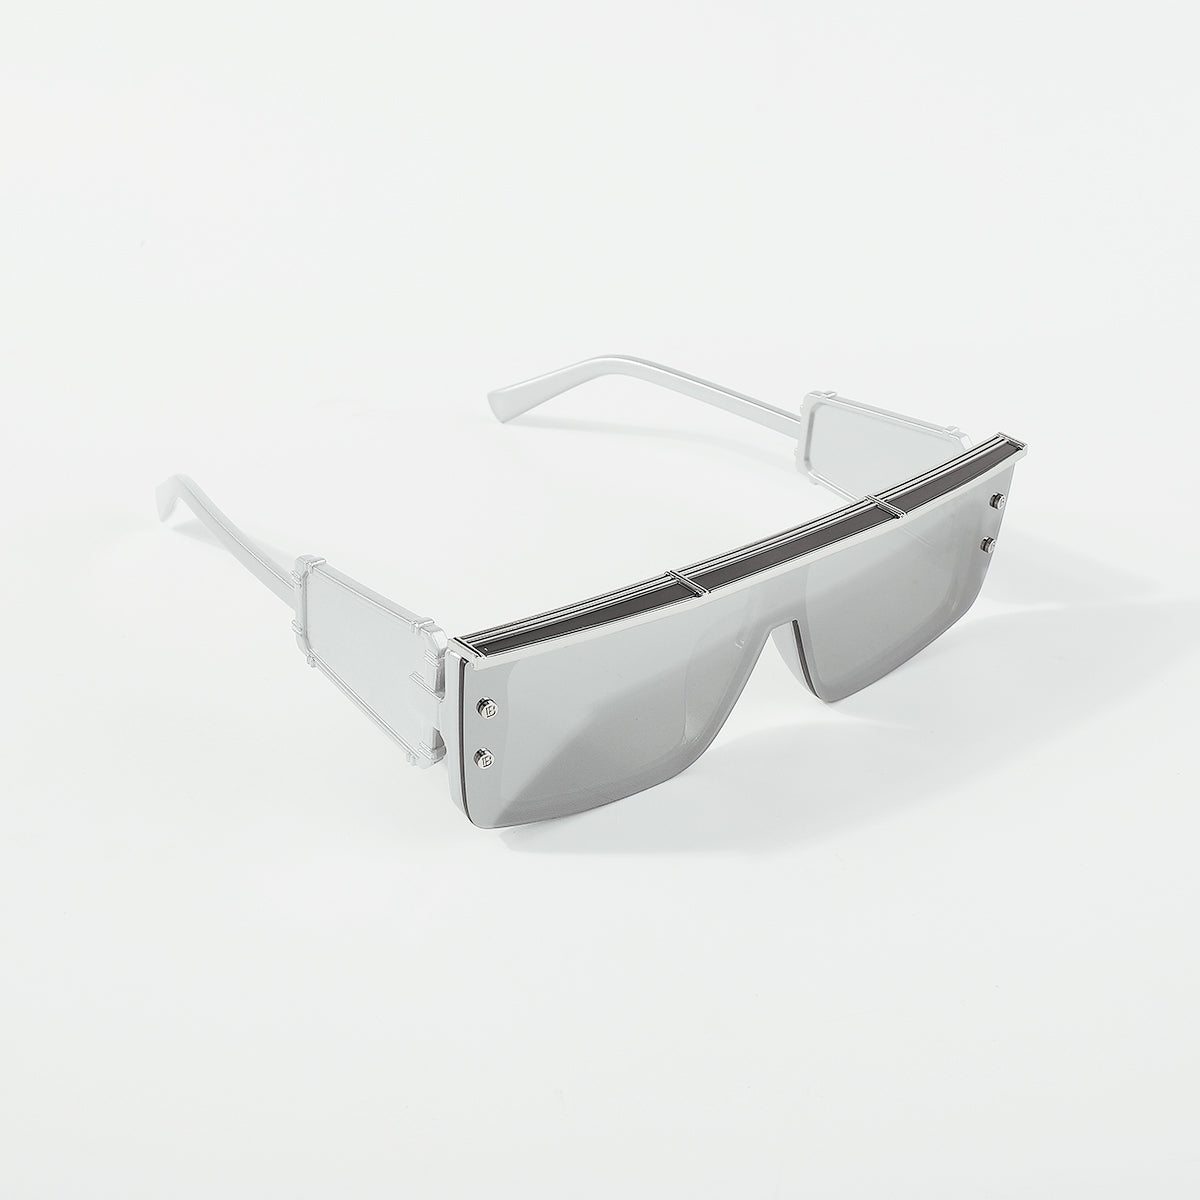 GL006 Futuristic Robotic Rectangle Sunglasses